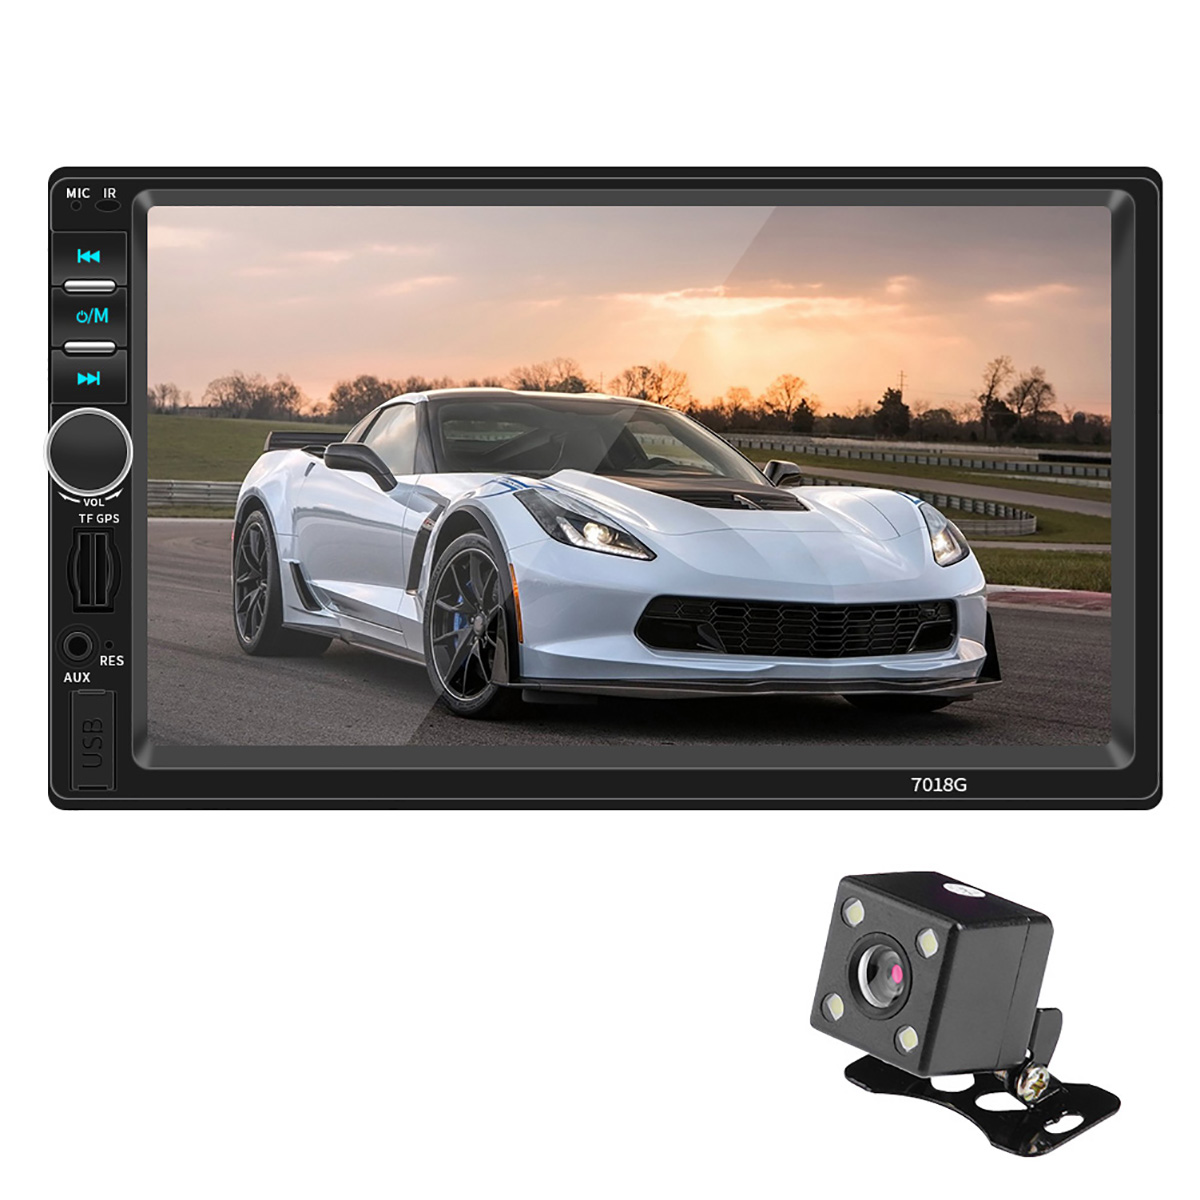 

7 Inch 7018G 2 Din Car Radio Stereo Auto MP3 MP5 Player GPS bluetooth Wifi Handsfree FM With Rear Camera